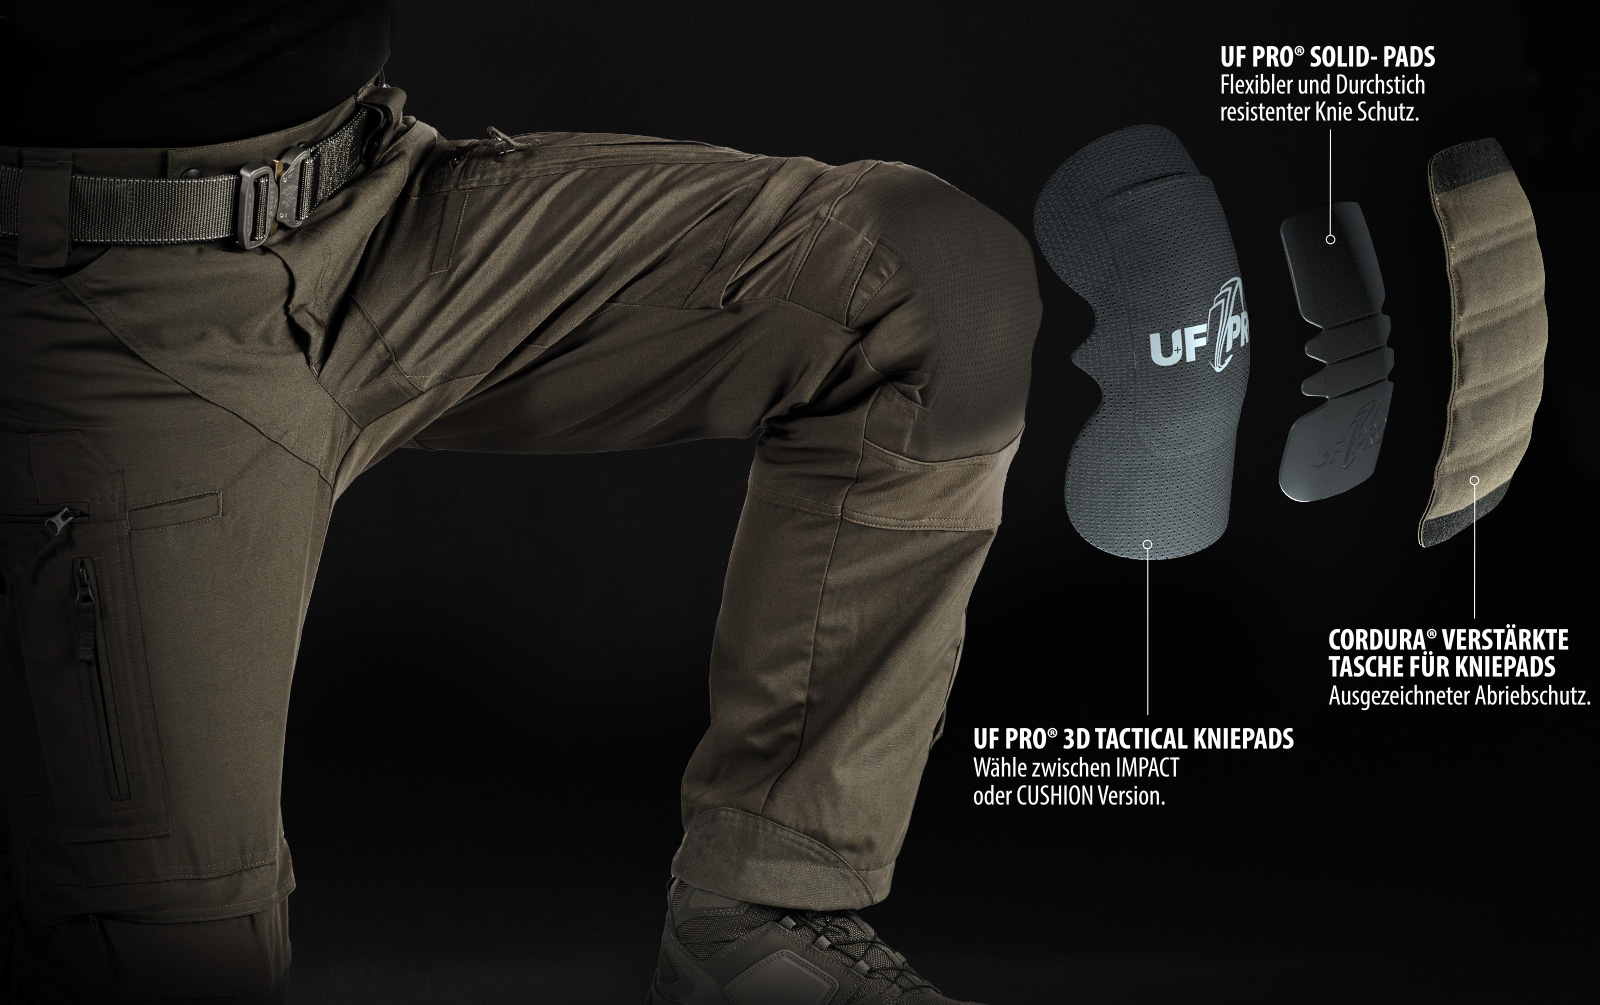 Das UF PRO Knieschutzsystem